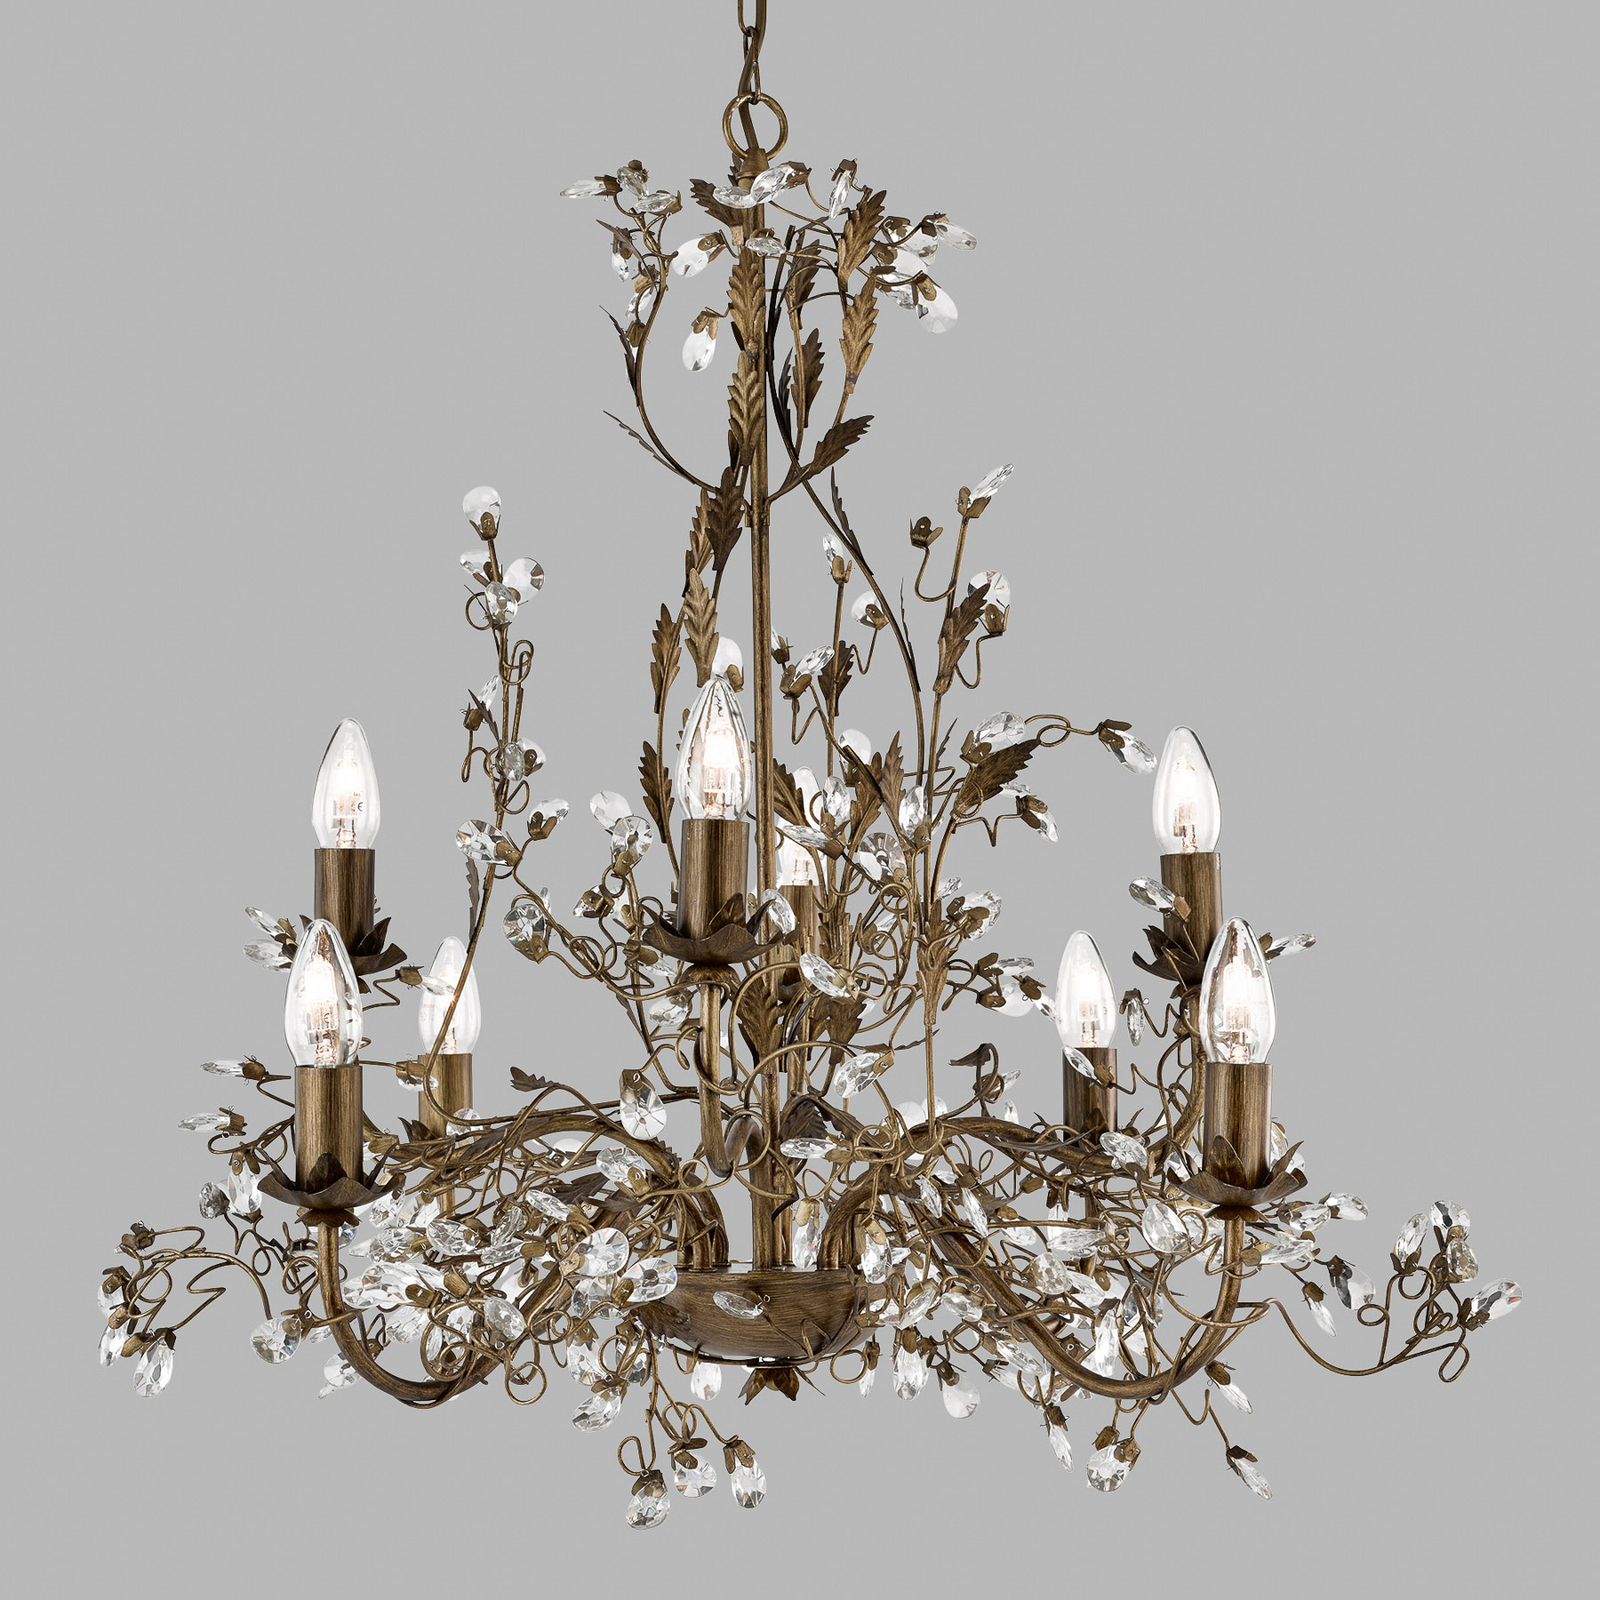 8 luci lampadario Almandite in stile fiorentino